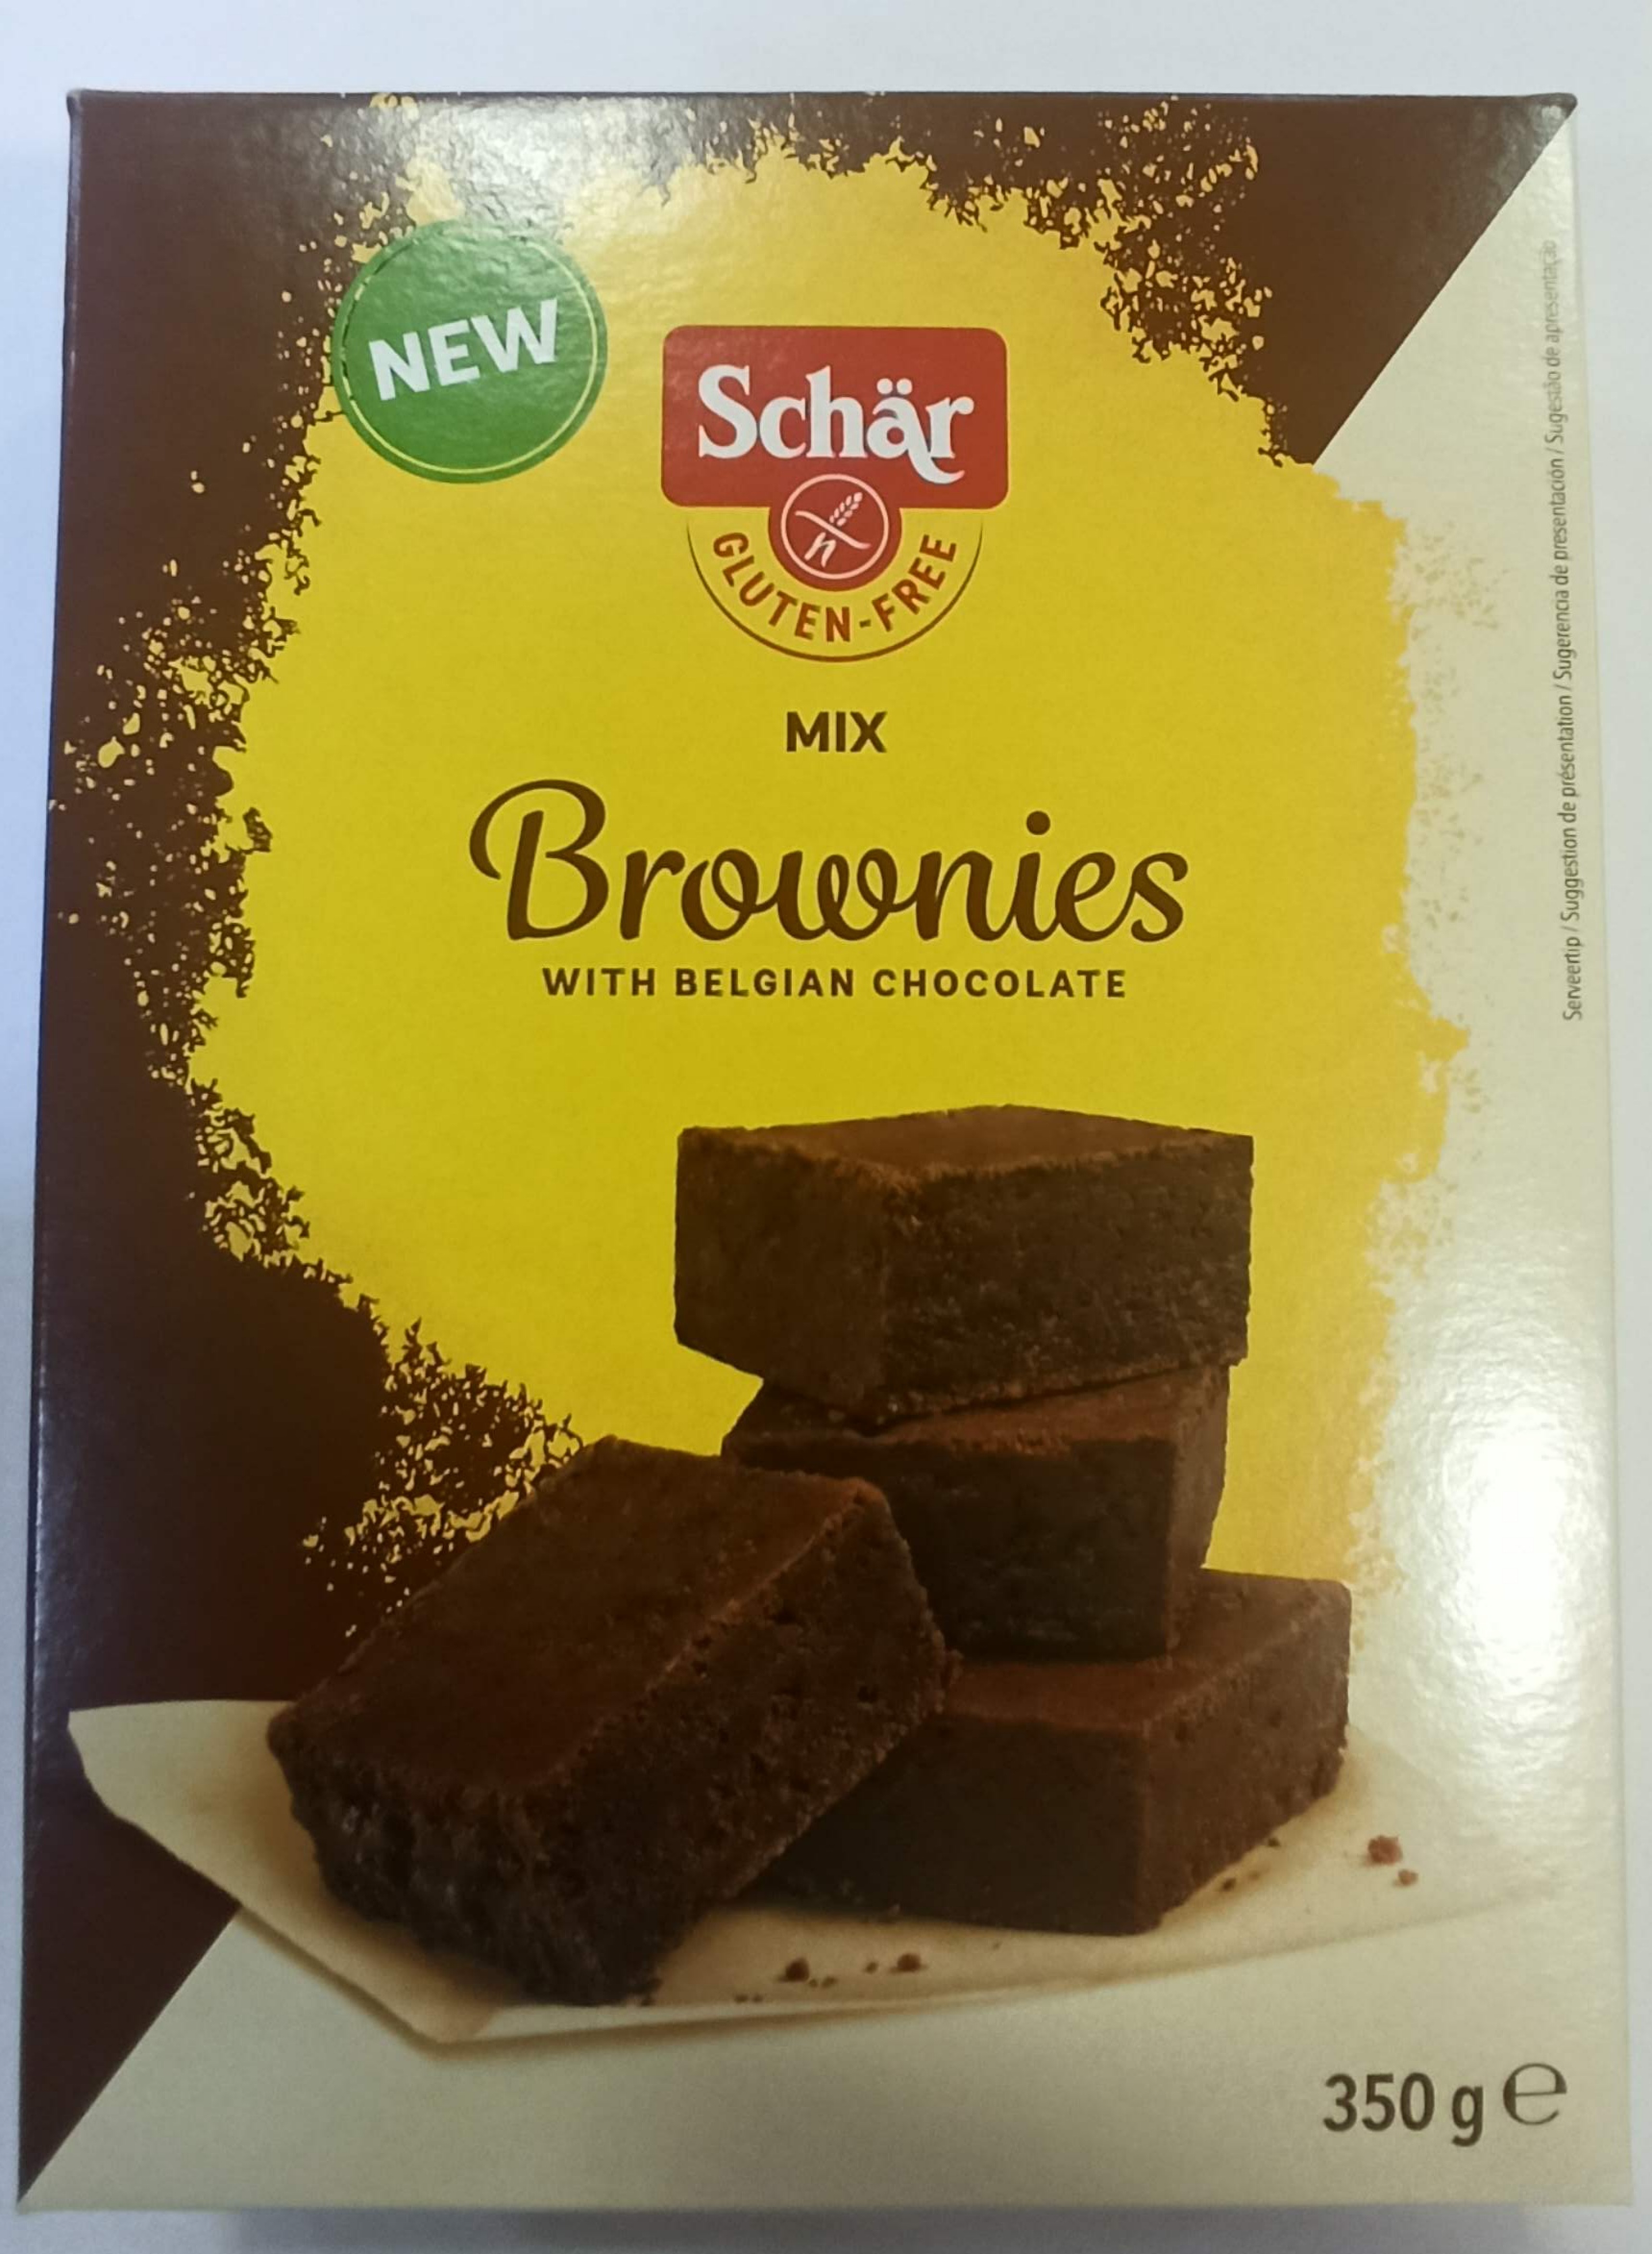 Mix Brownies Schar